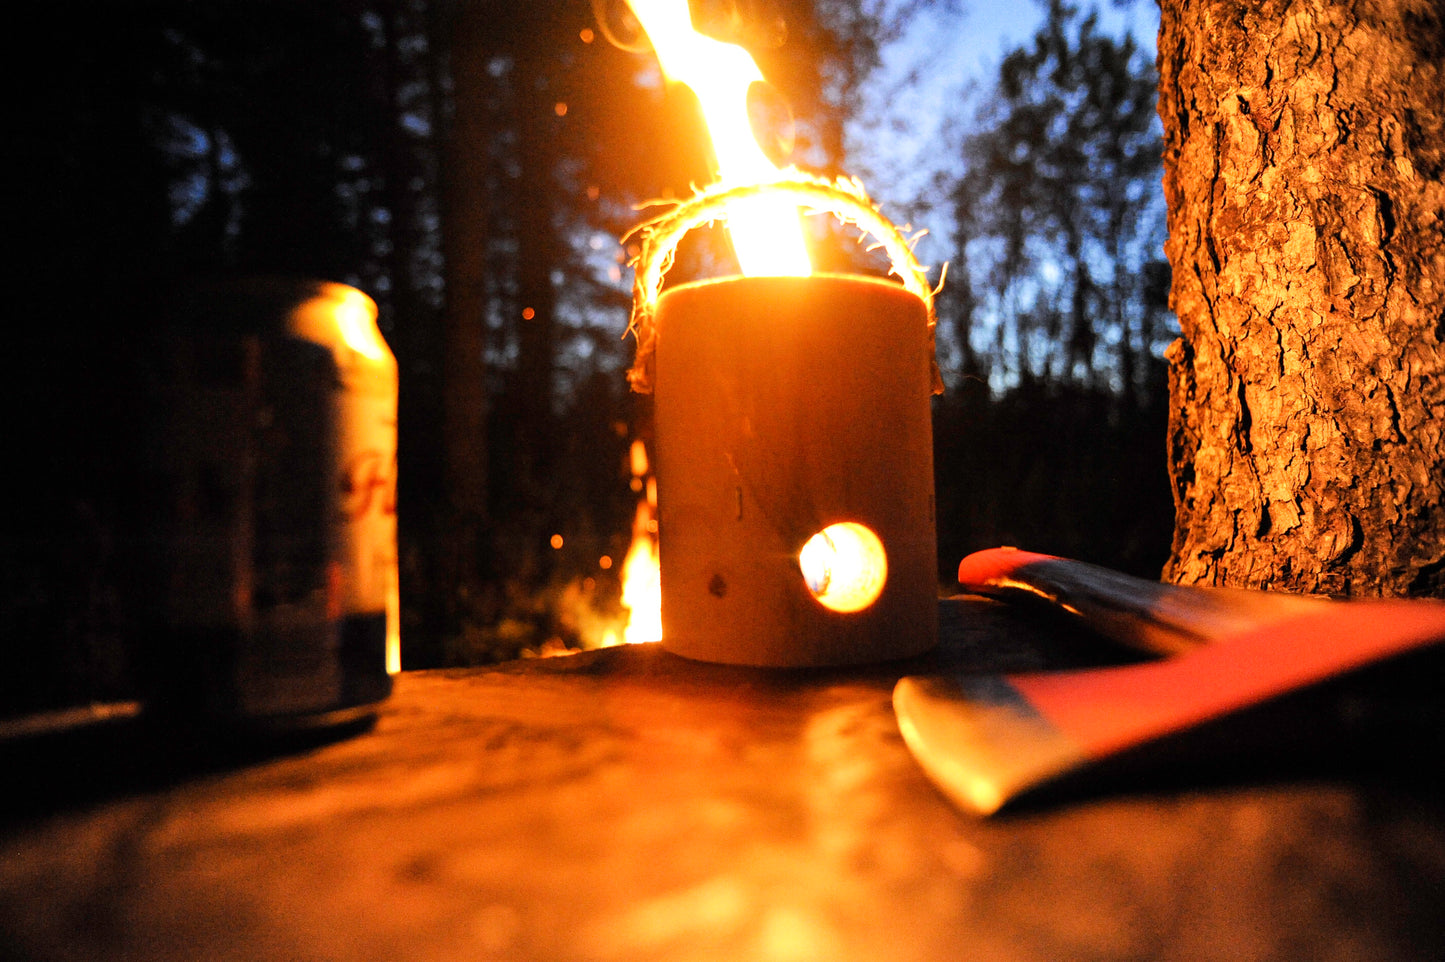 swedish fire log in use